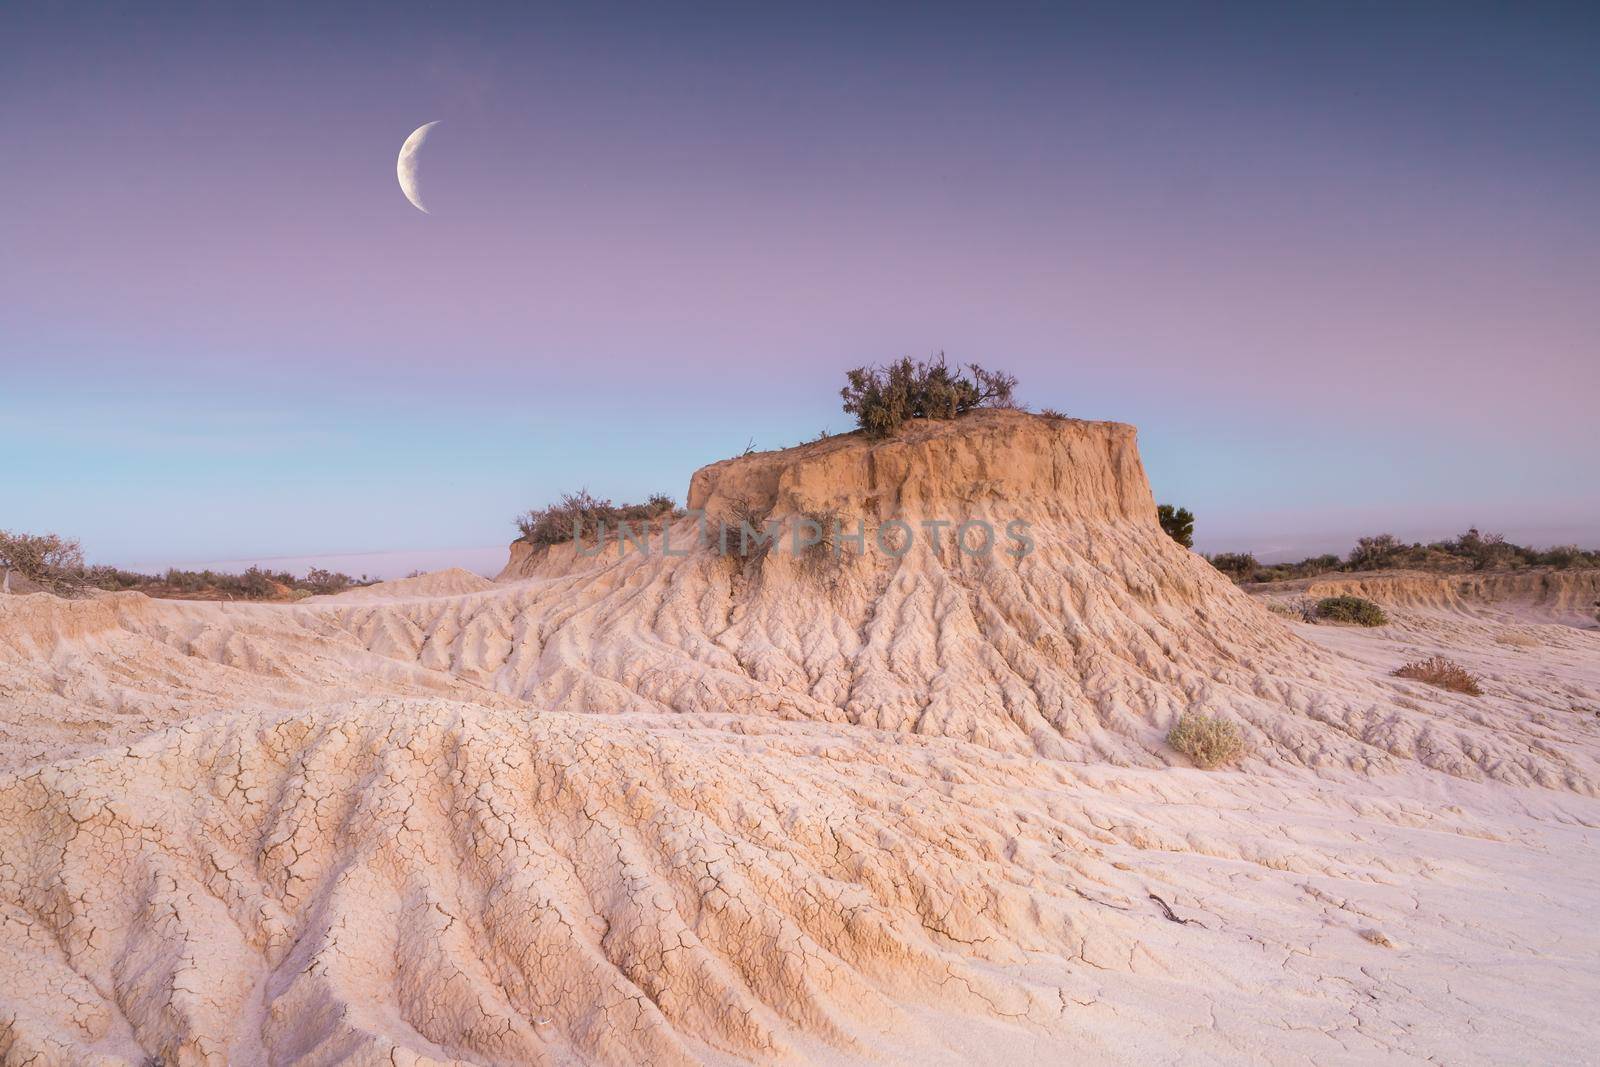 Dawn light over the desert lunette in outback Australia by lovleah